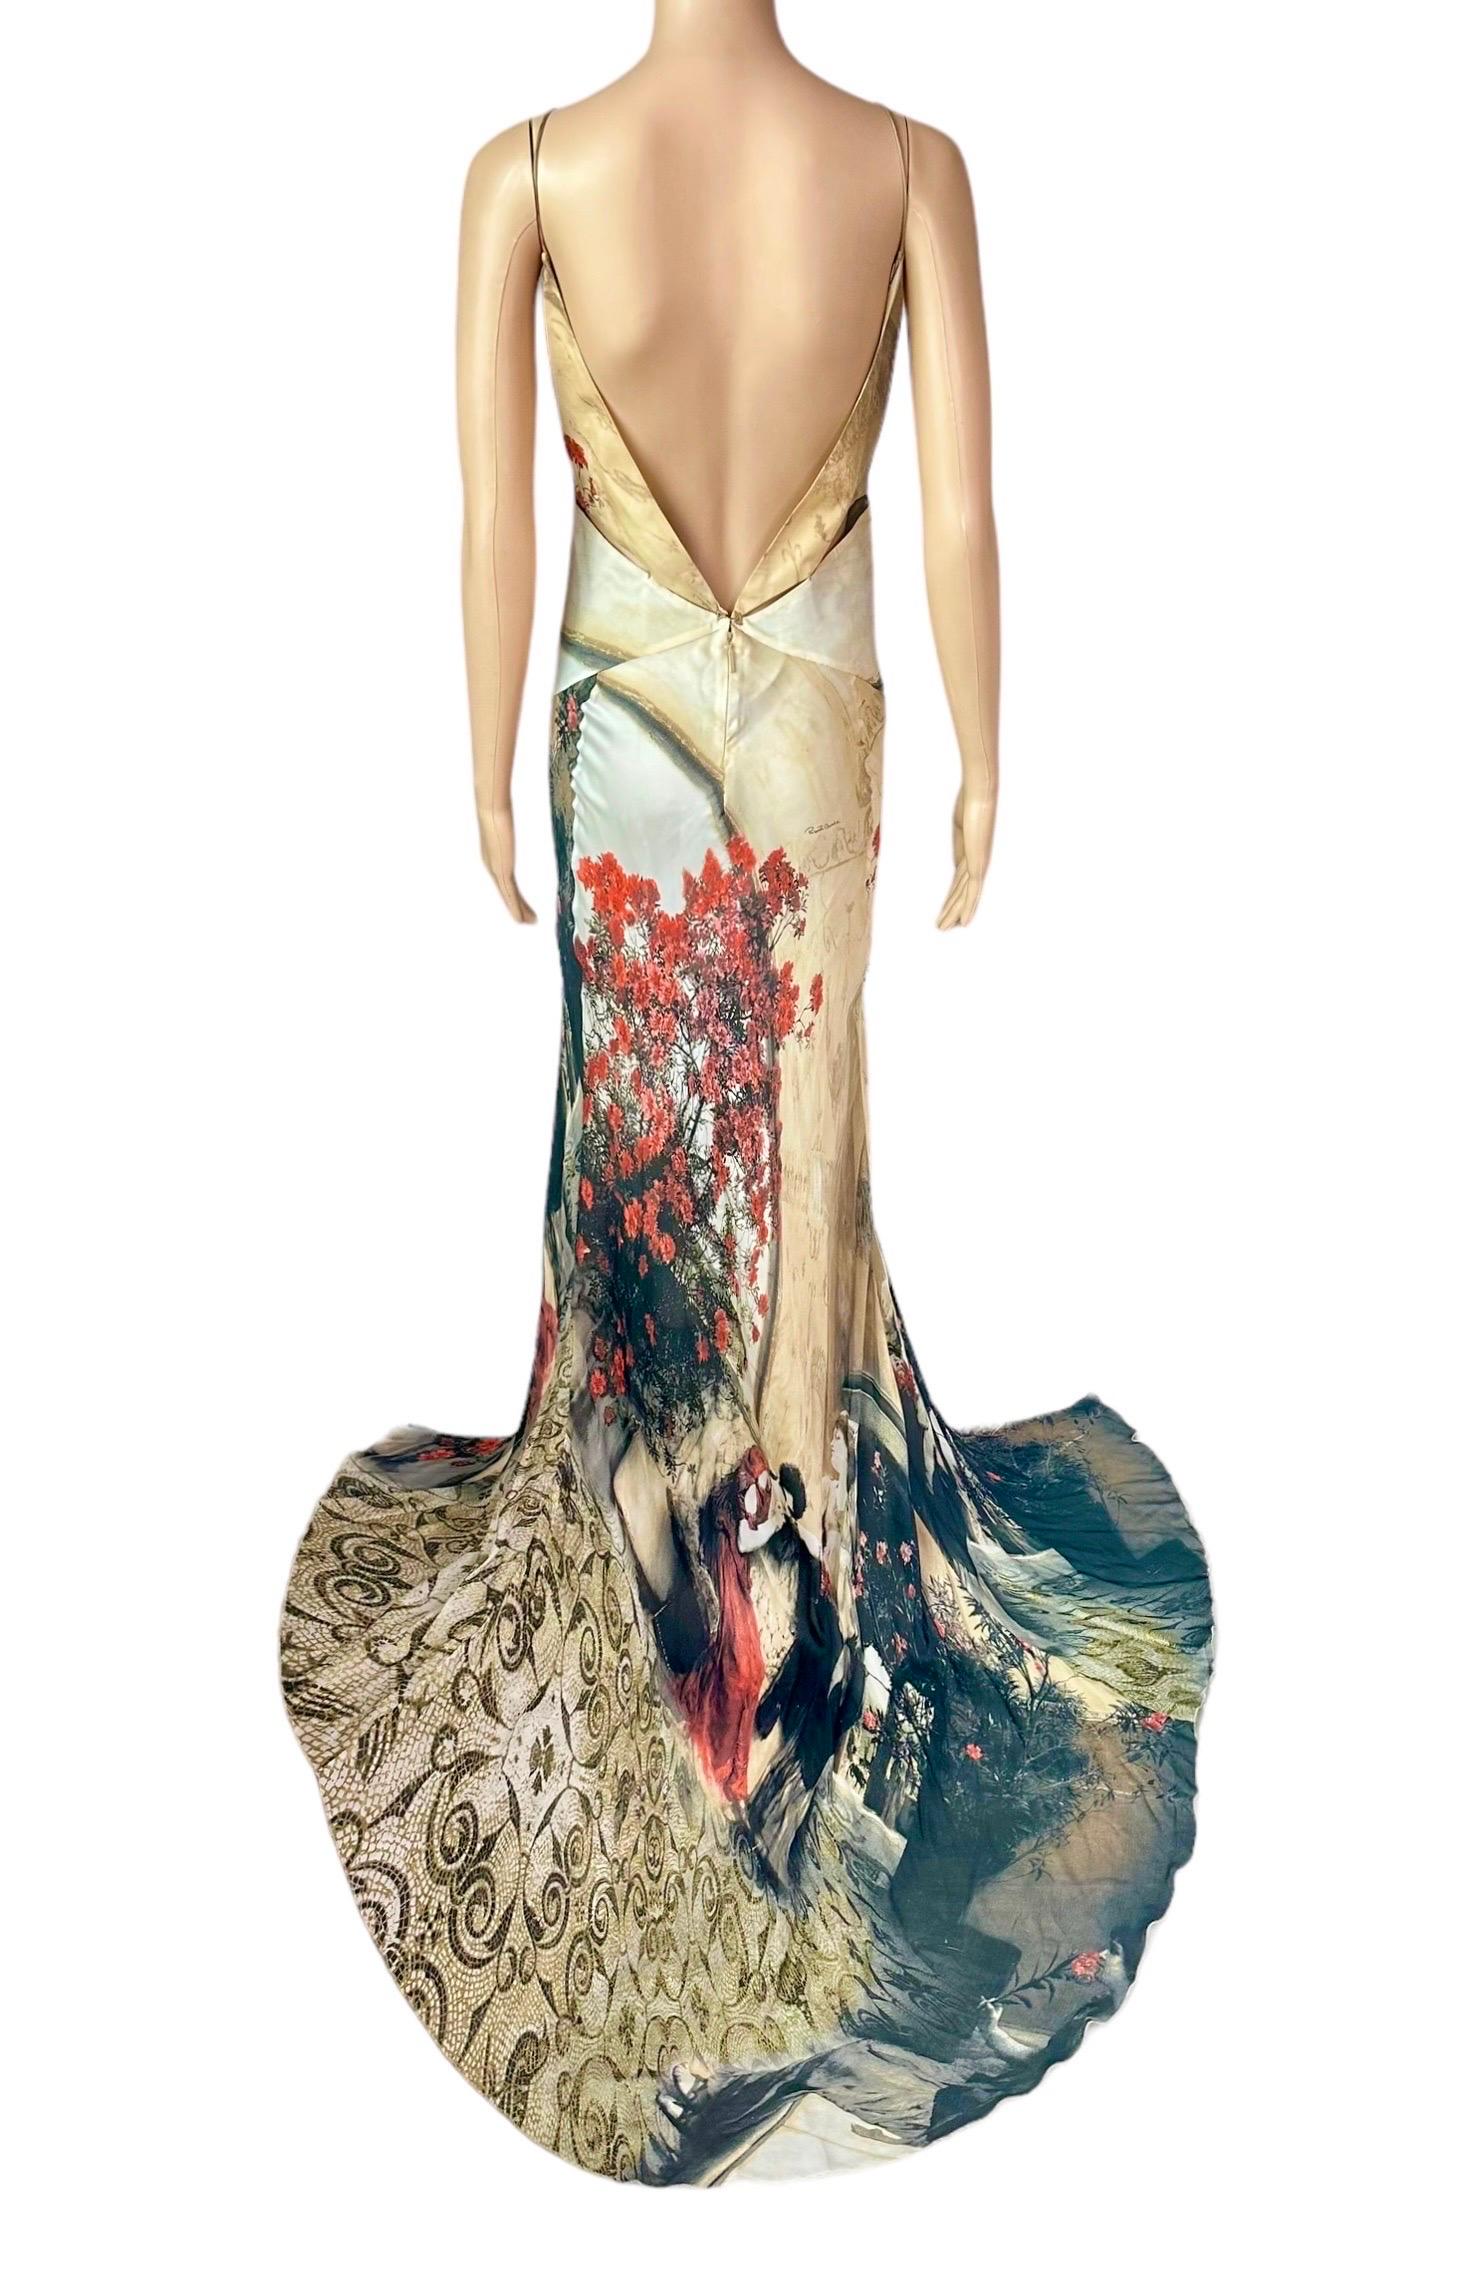 Roberto Cavalli S/S 2004 Runway Cutout High Slit Silk Slip Evening Dress Gown For Sale 4